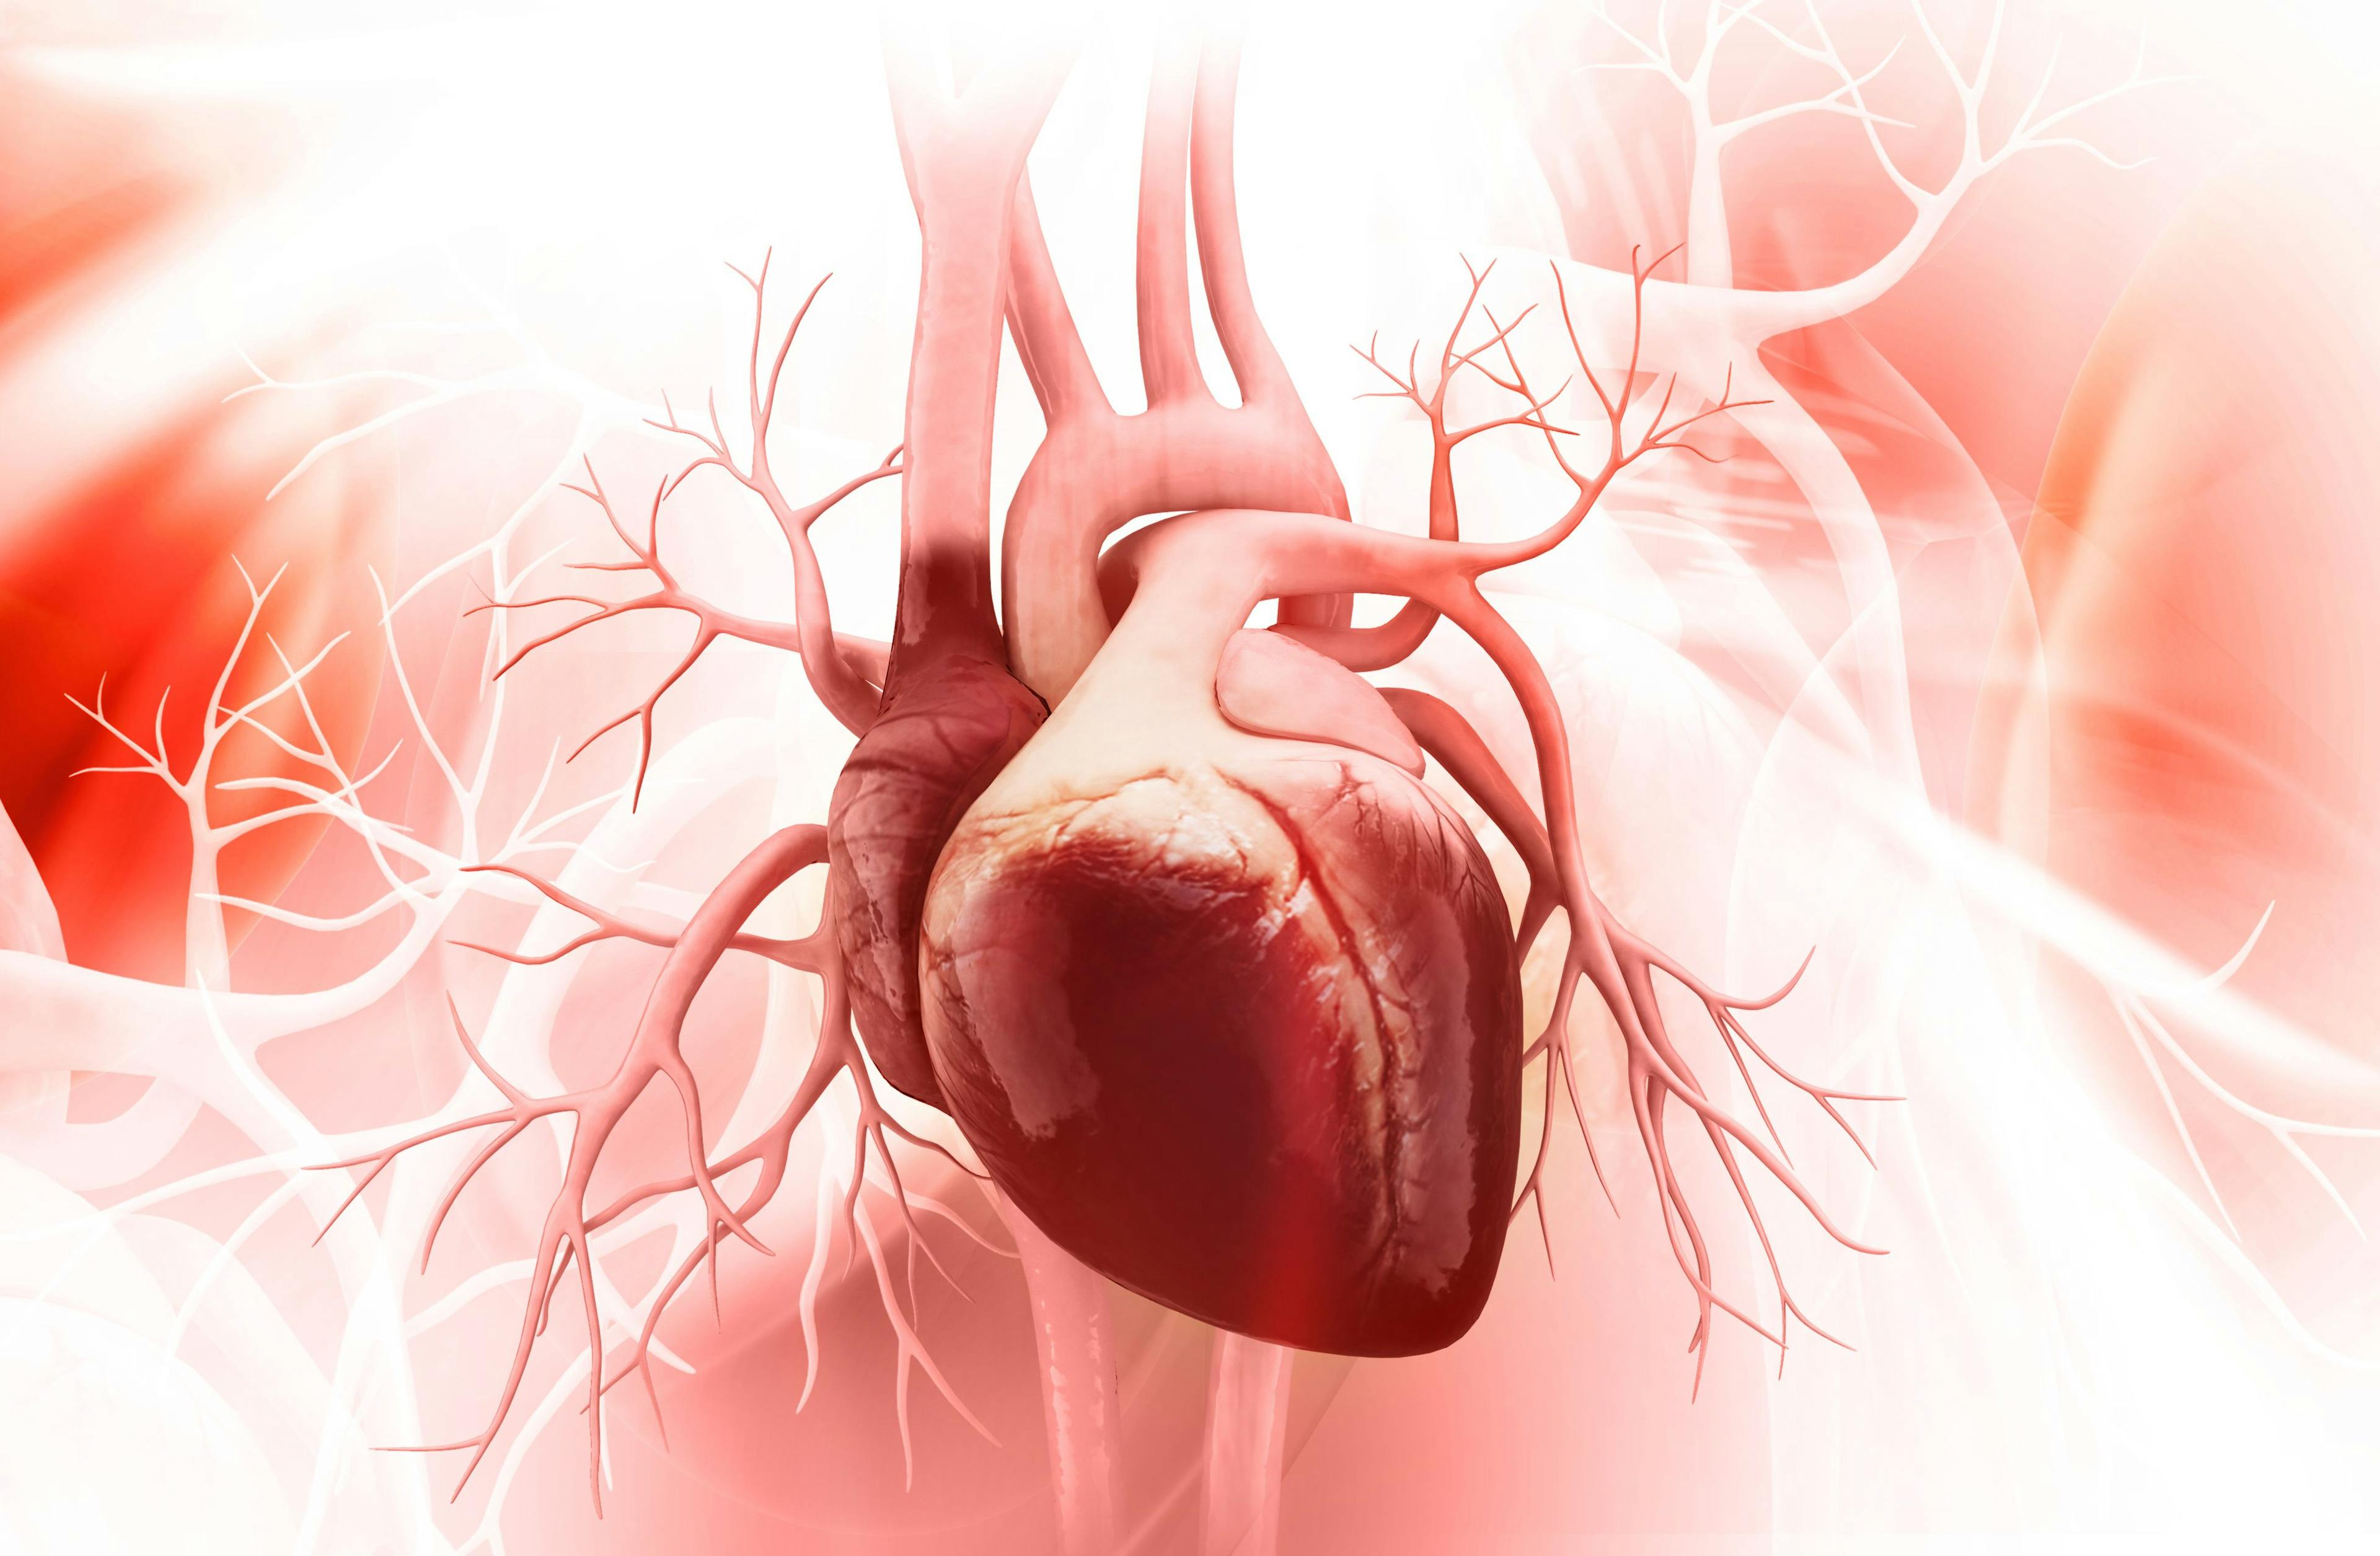 Digital illustration of the cardiovascular system